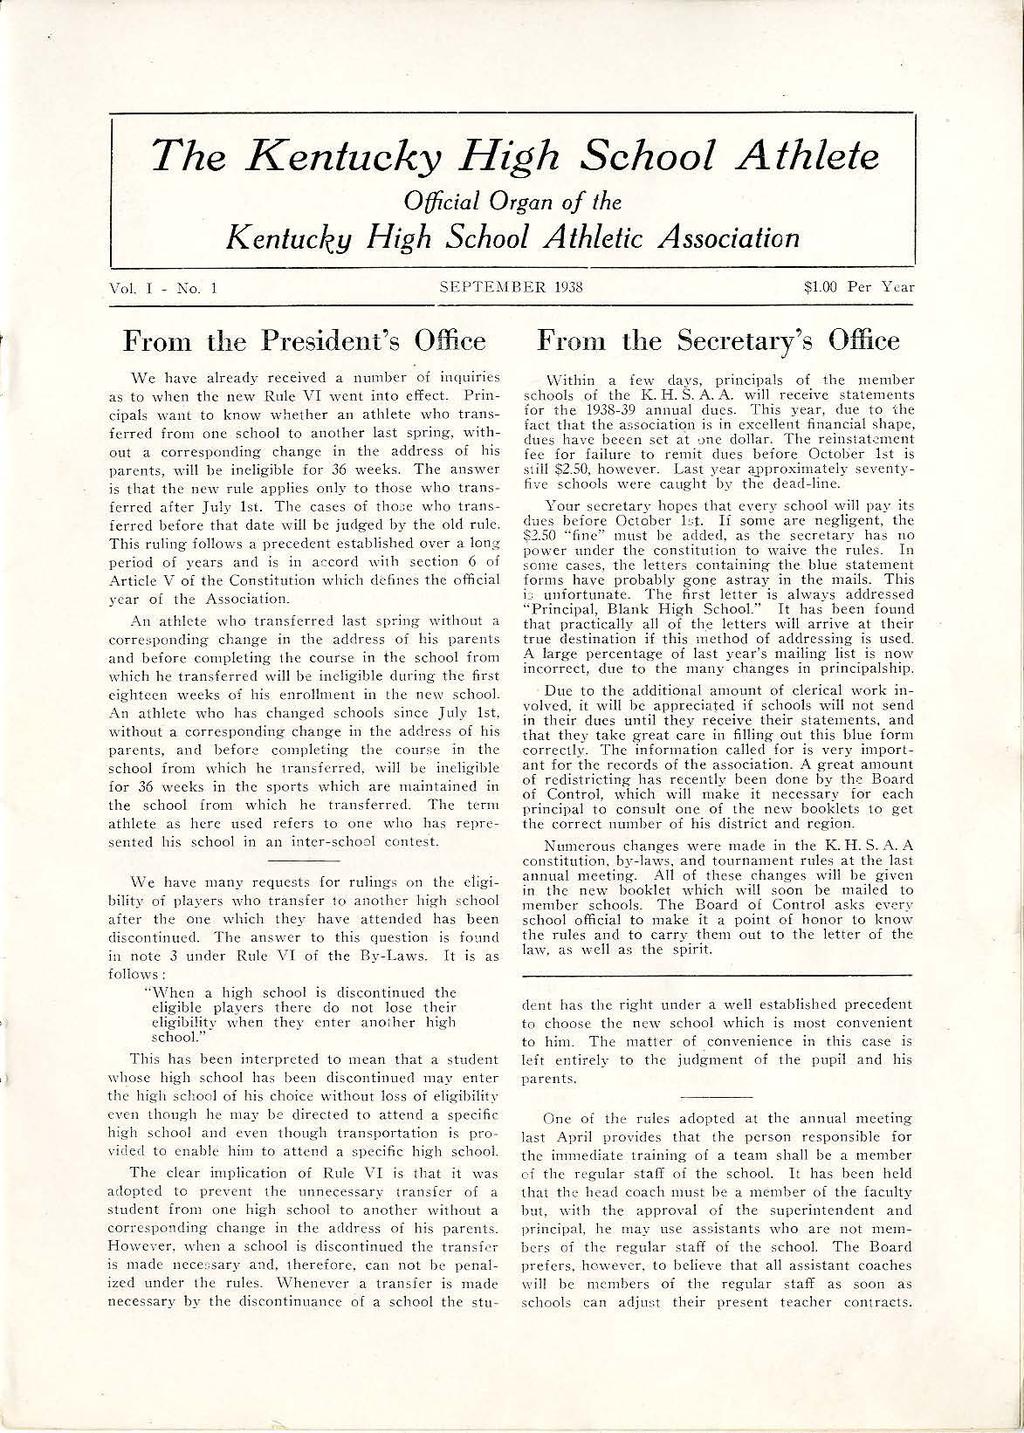 The Kentucky Hgh School Athlete Offcal Organ of the Kentucky Hgh School Athletc Assocaton VoL J - No. 1 SEPTEl\fBER 1938 $1.